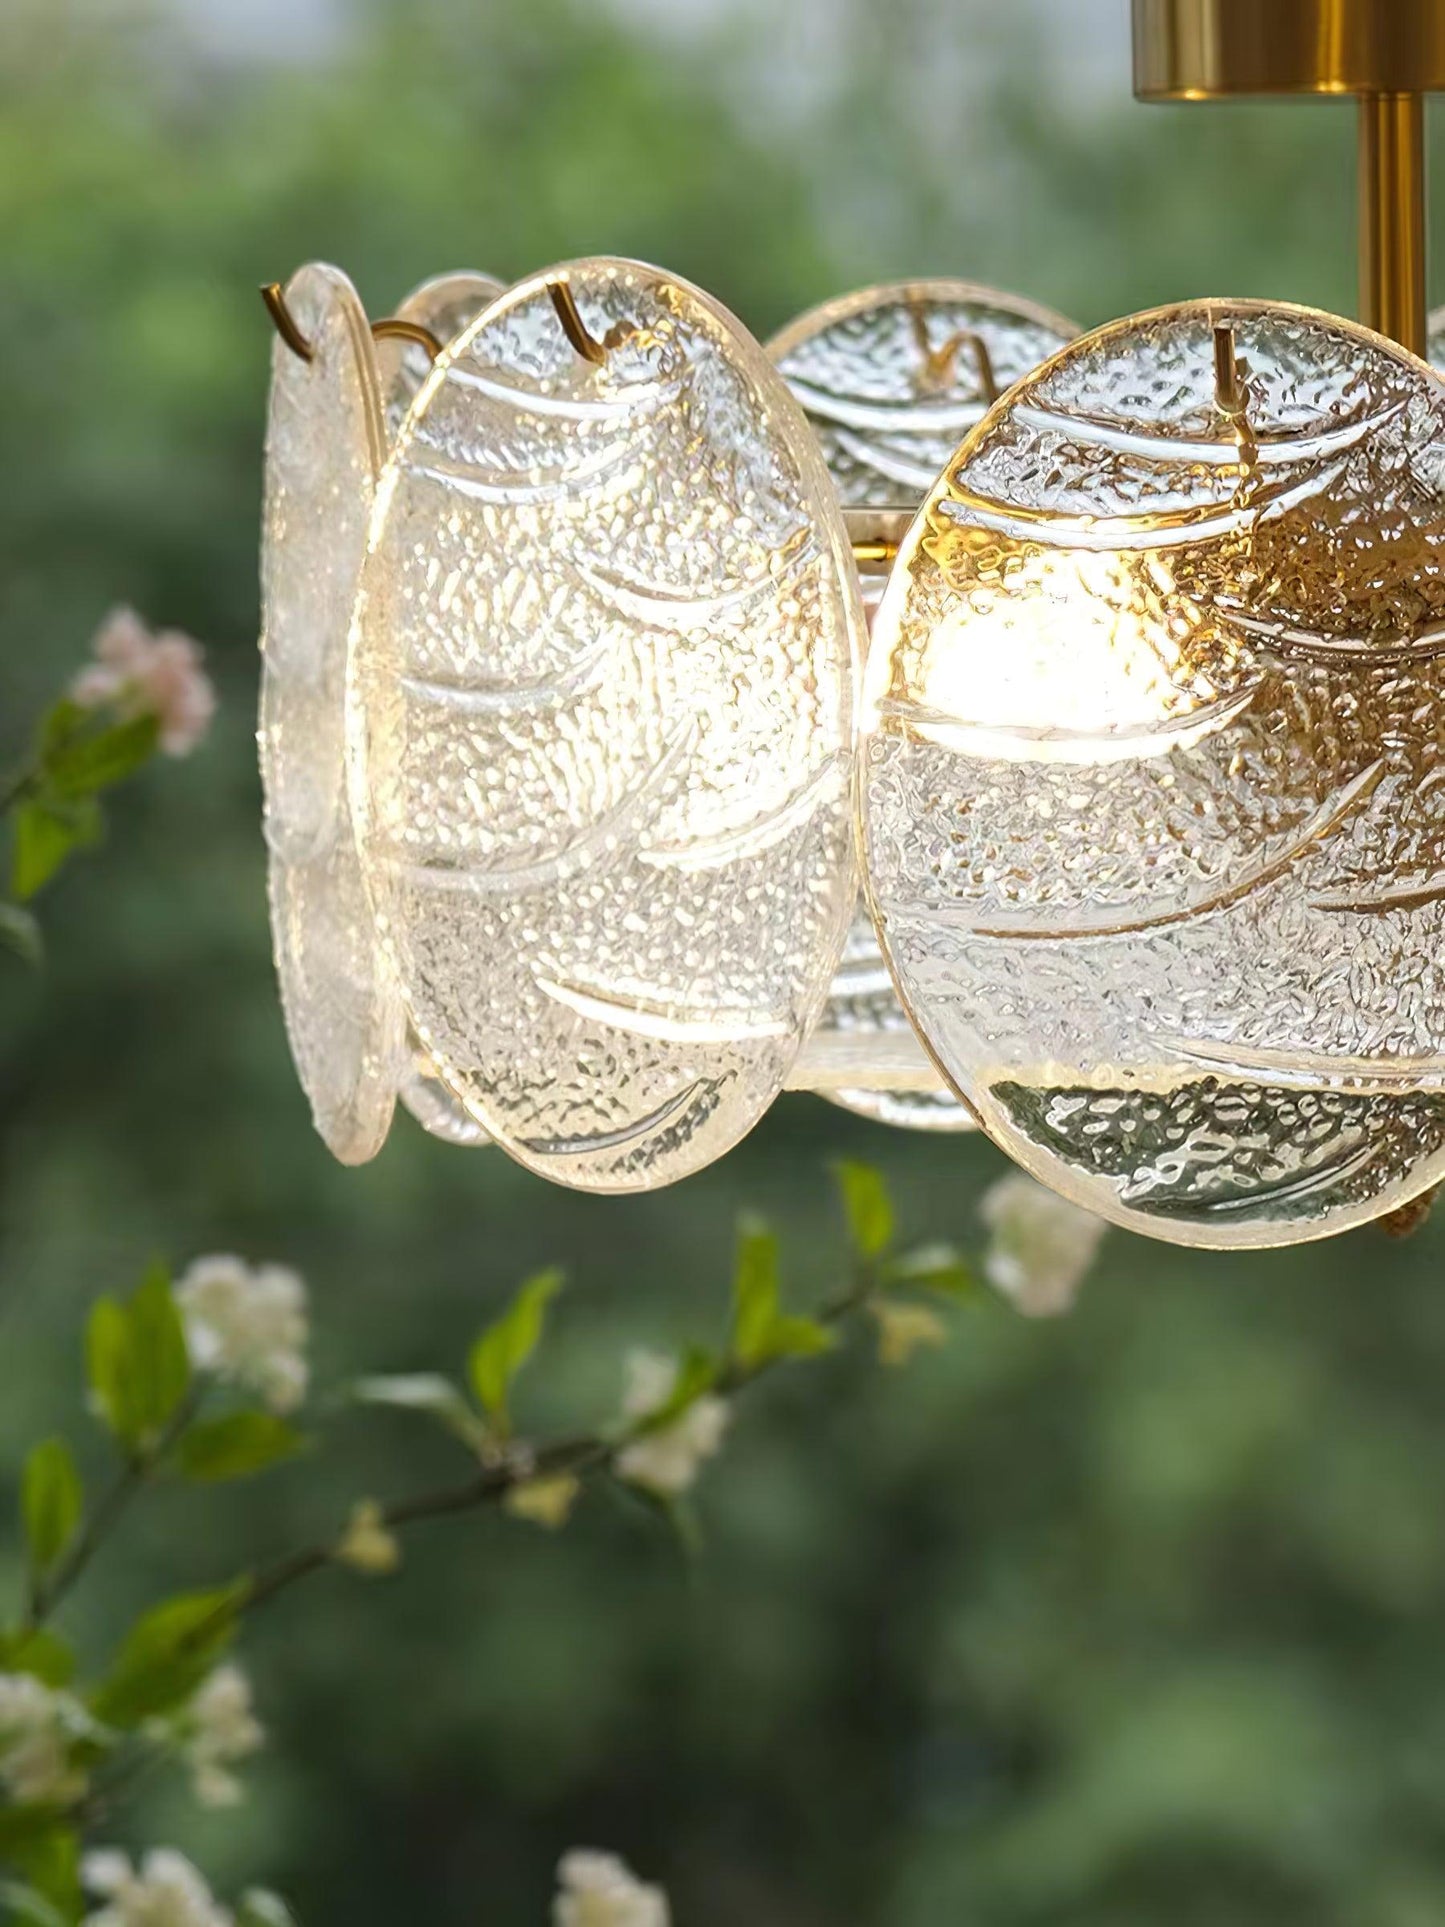 Sue-Anne Ceiling Lamp